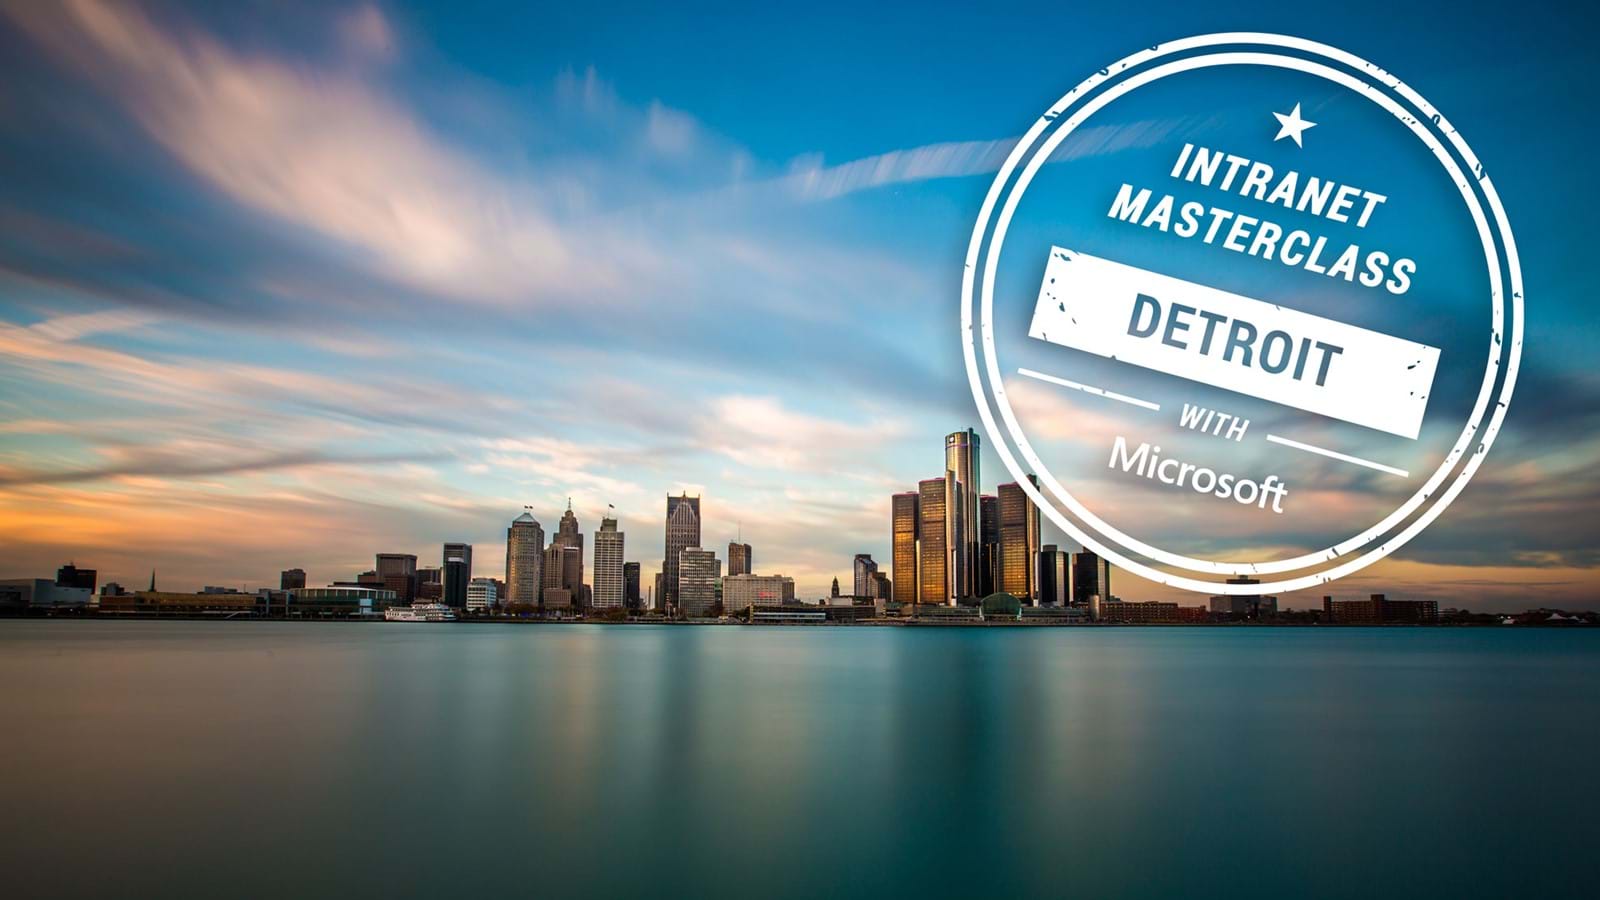 Employee Experience Intranet masterclass event, Detroit 